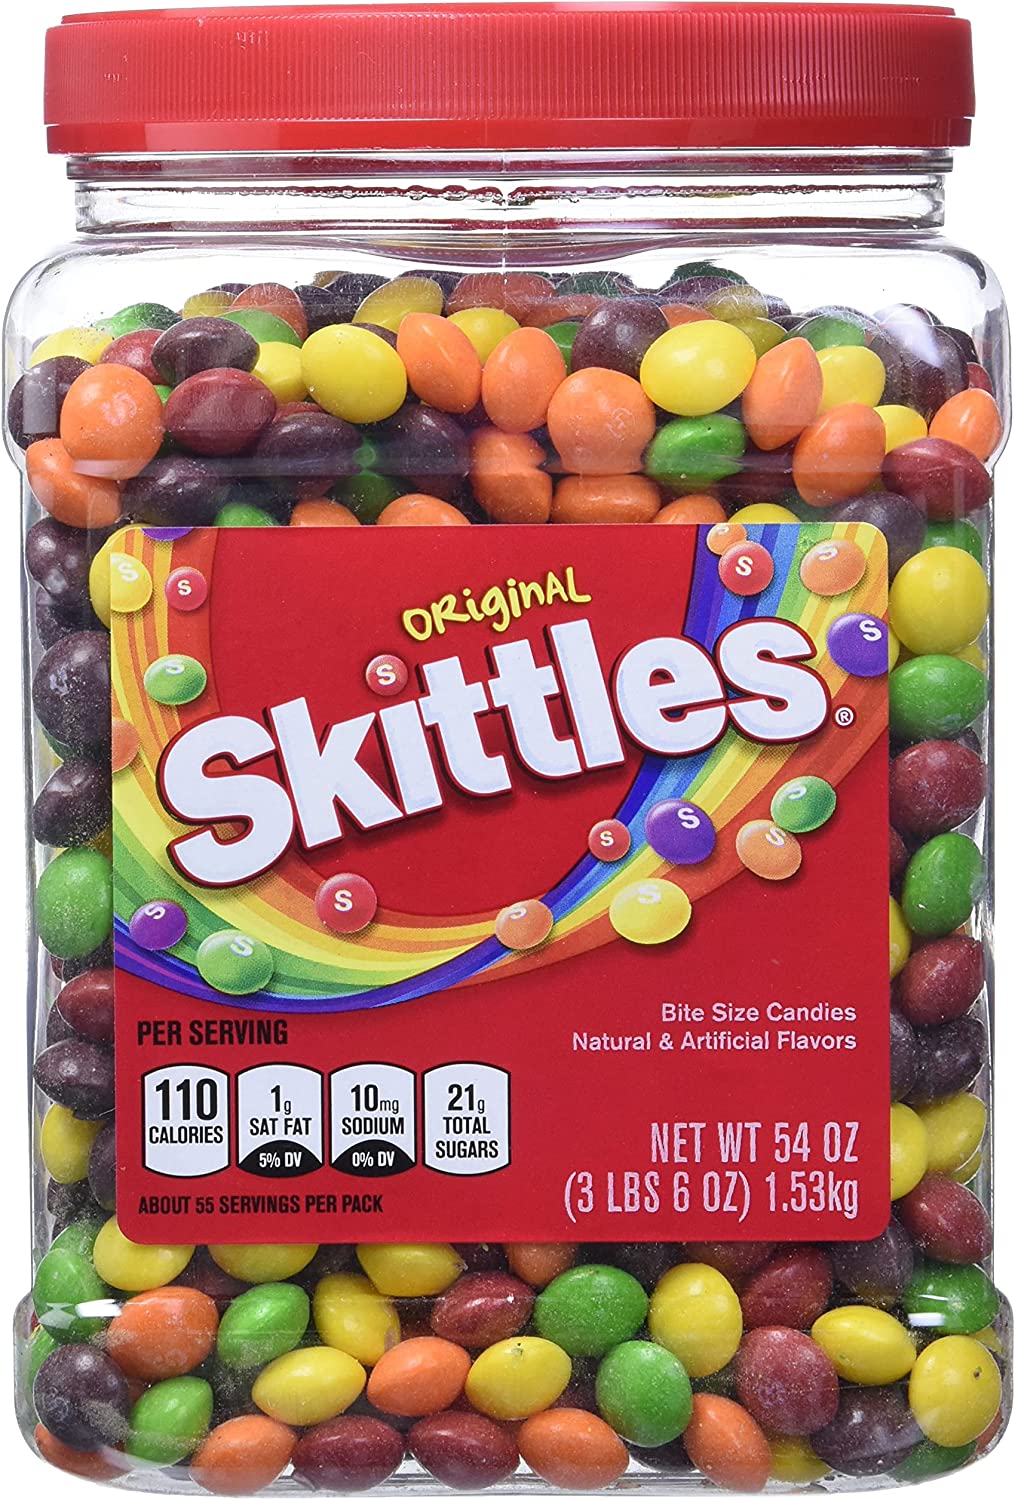 Skittles Original Fruity Candy Jar, 54 oz., 1.53 kg (Pack of 1)